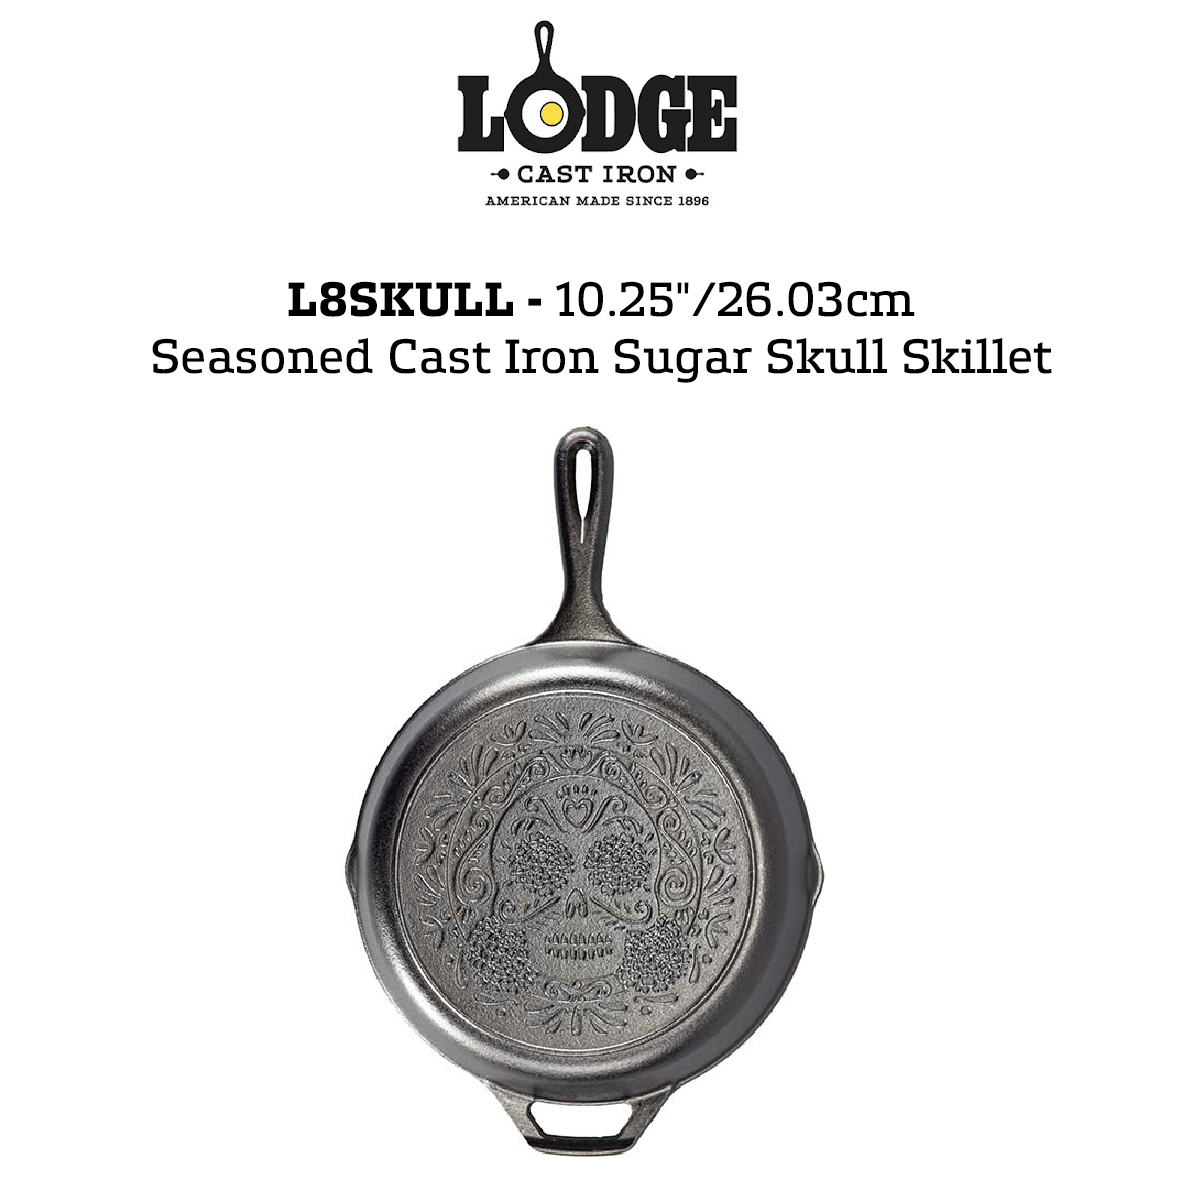 Lodge Seasoned Cast Iron Sugar Skull Skillet with Handle Holder